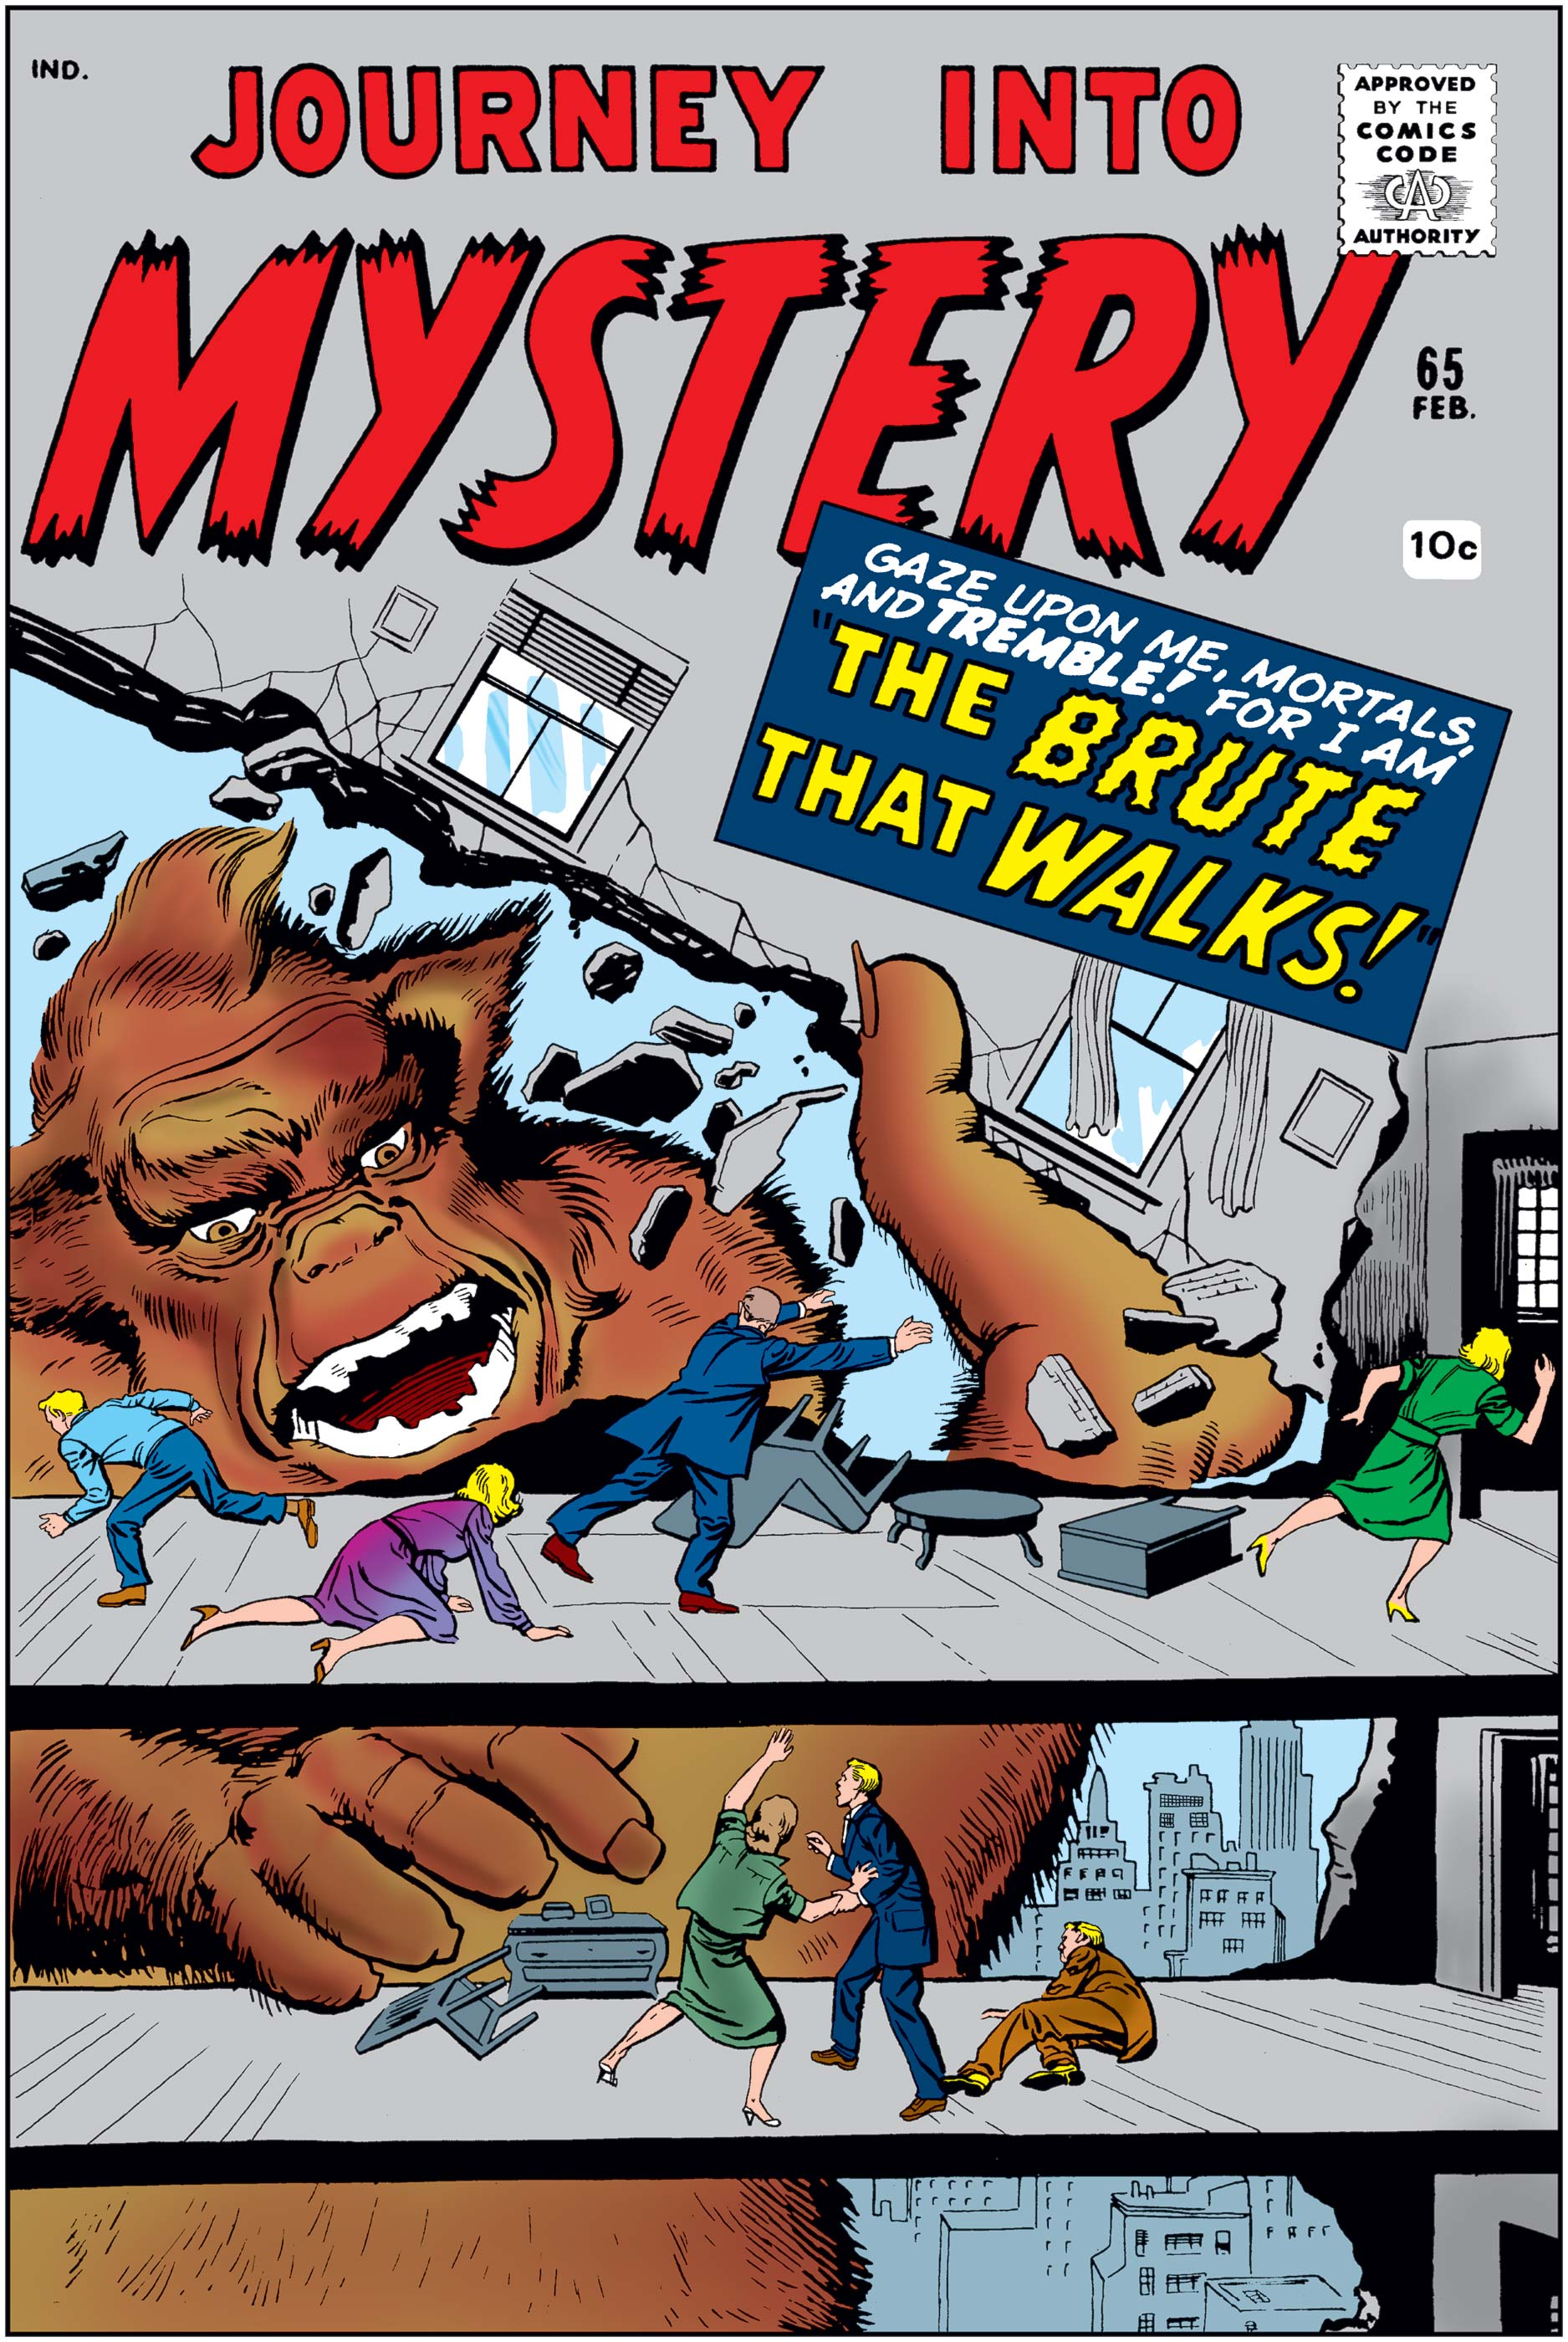 Journey Into Mystery (1952) #65